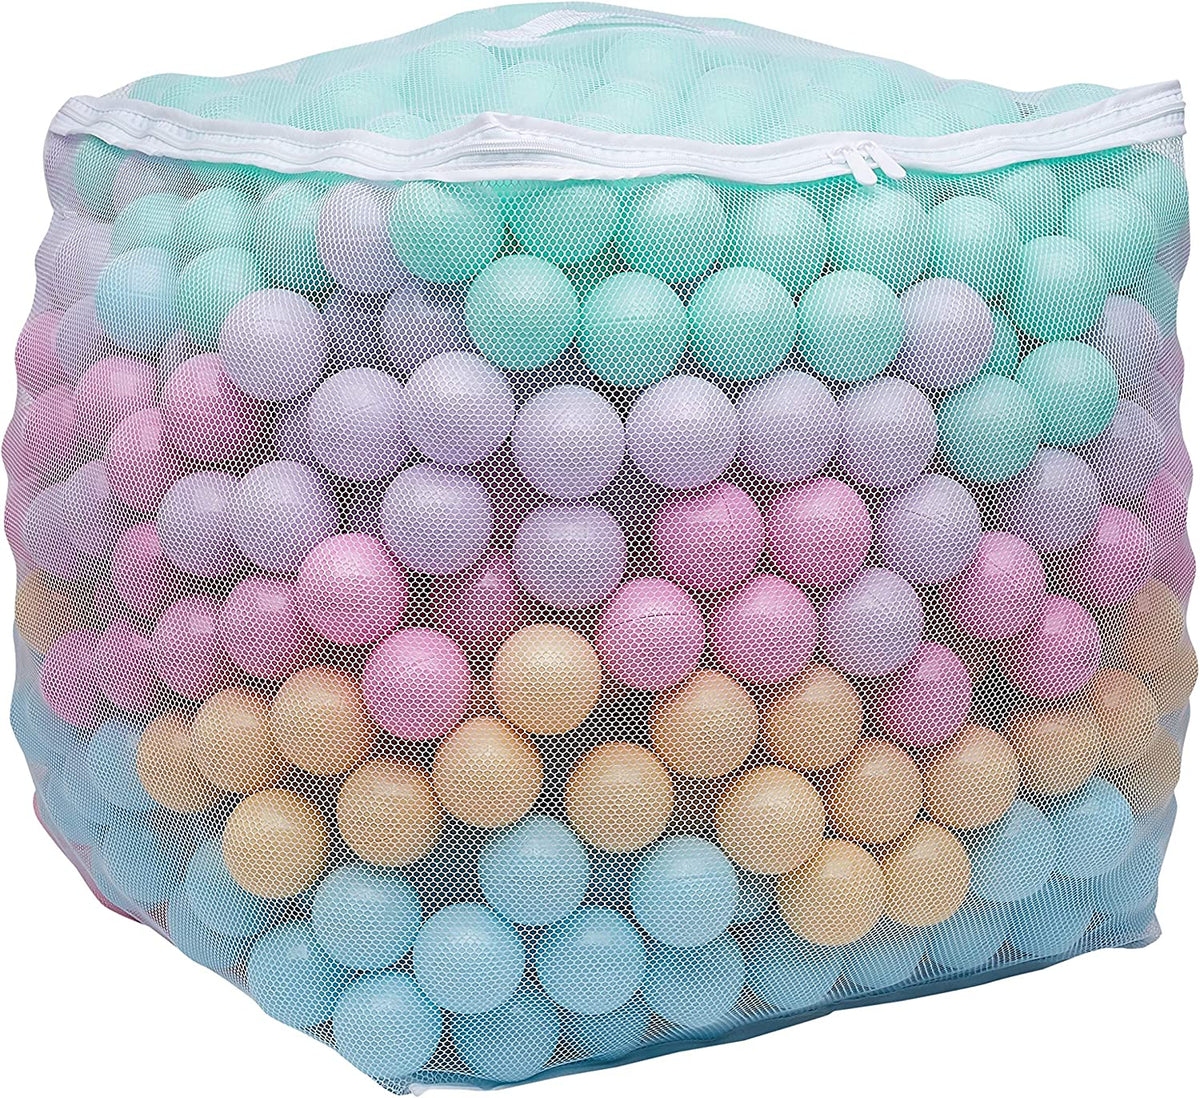 Kids Play Balls: 1000 Balls with Storage Bag-ChandeliersDecor